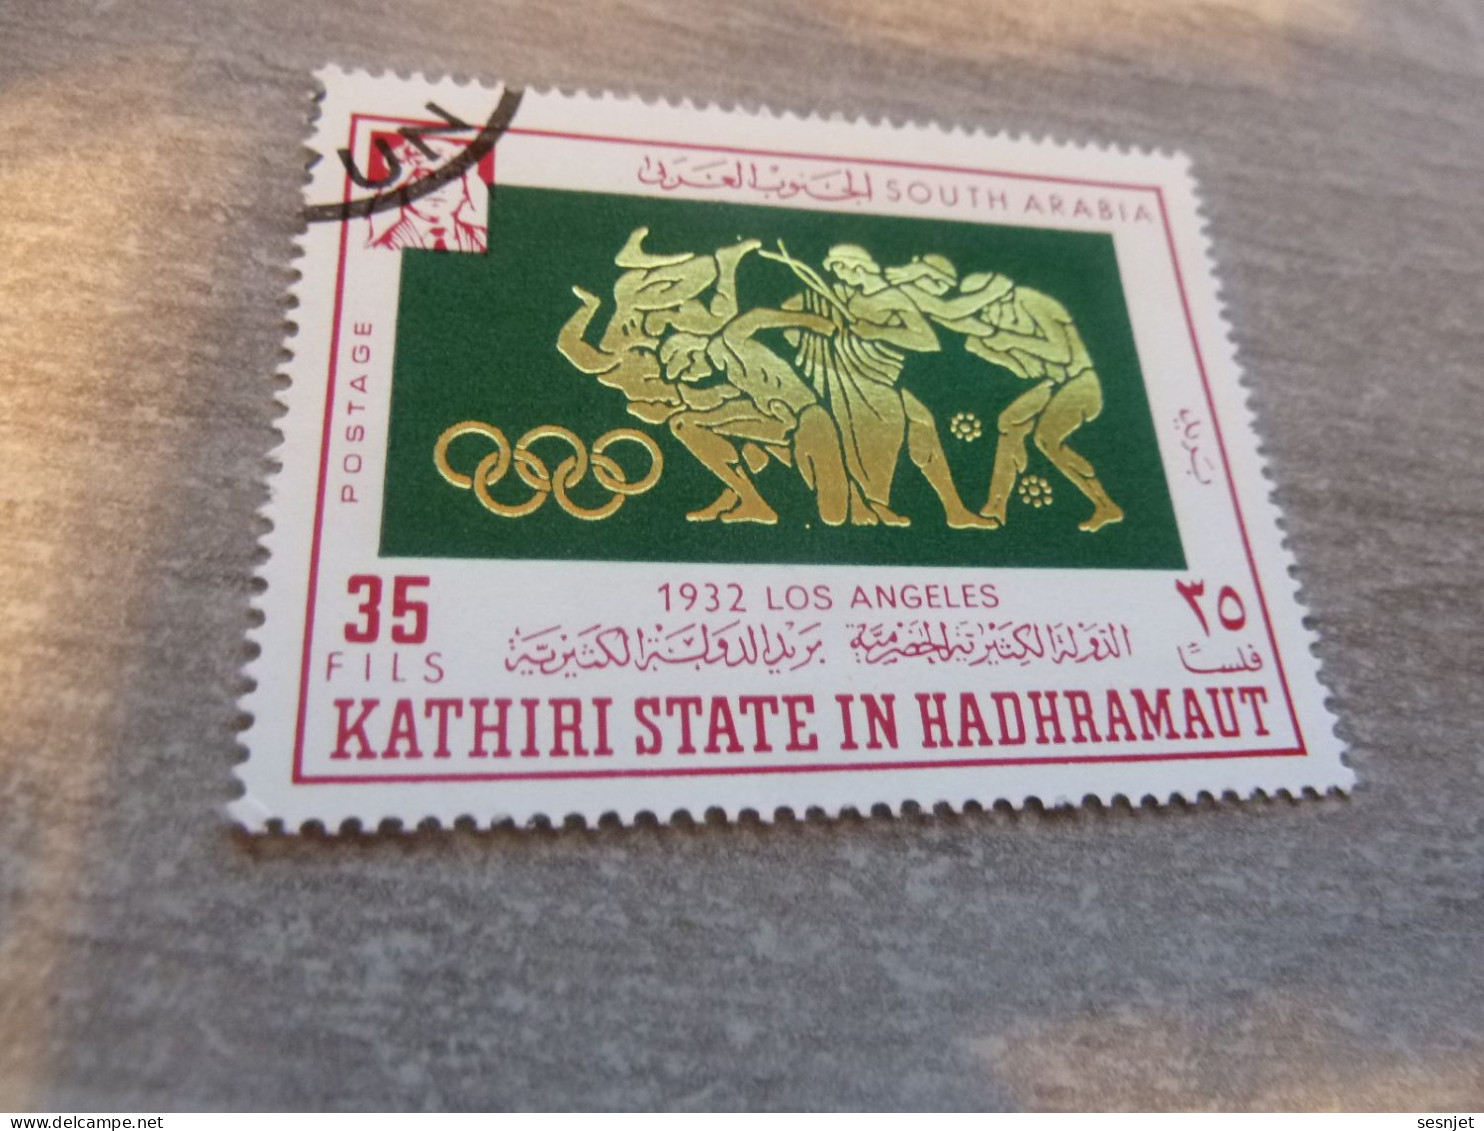 Kathiri State In Hadhramaut - 1932 - Los Angeles - Val 35 Fils - Postage - Multicolore - Oblitéré - - Verano 1932: Los Angeles